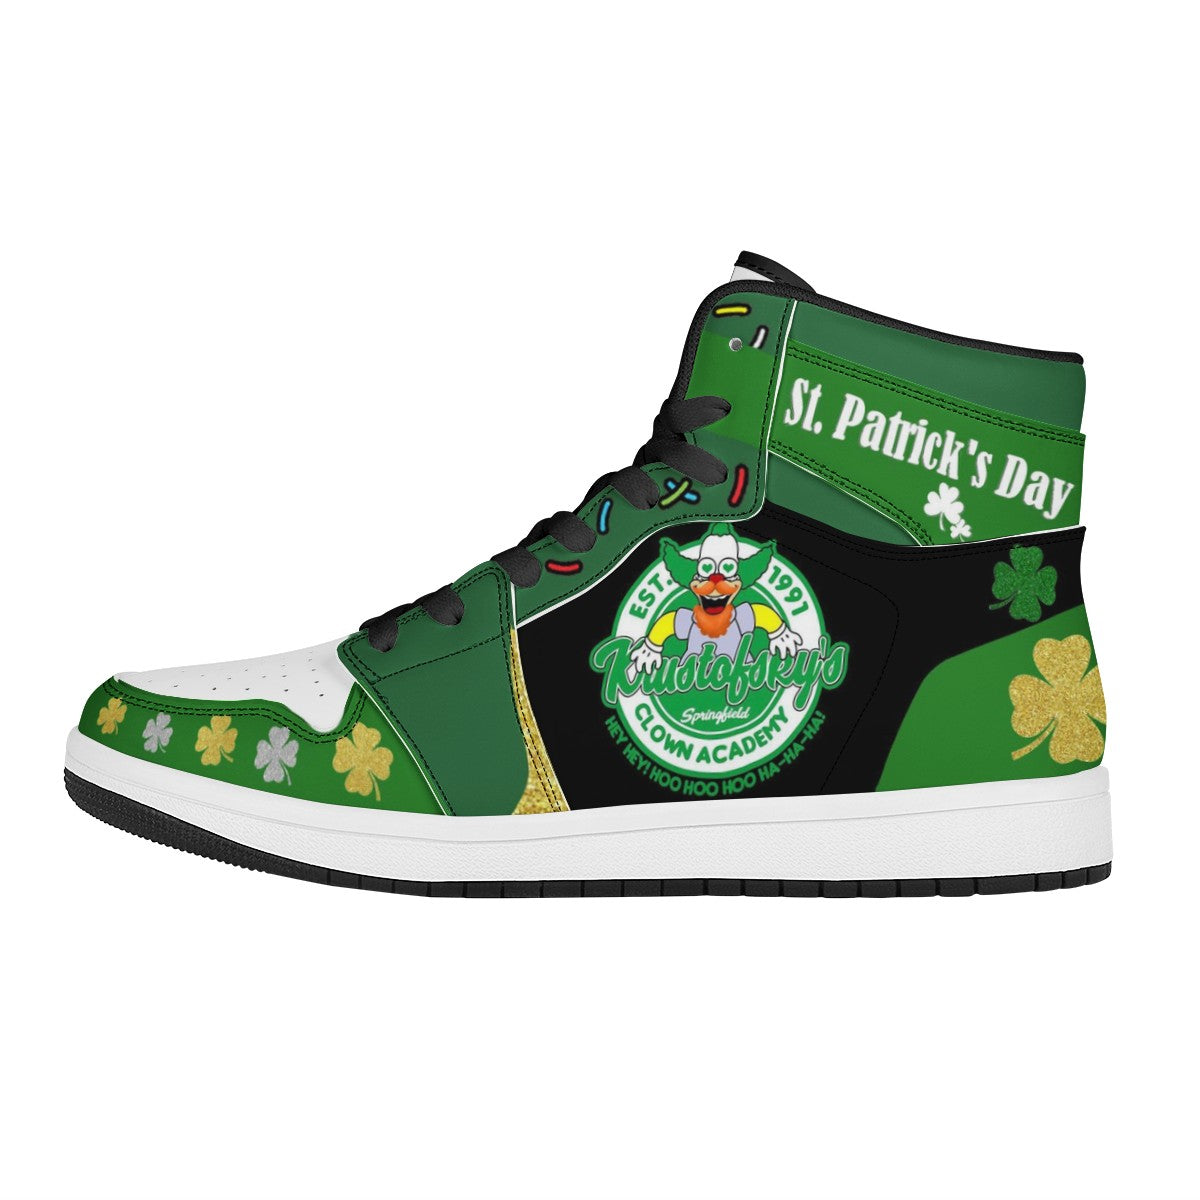 St. Patrick's Day Custom Nike Air Jordan 1 Leather Sneaker